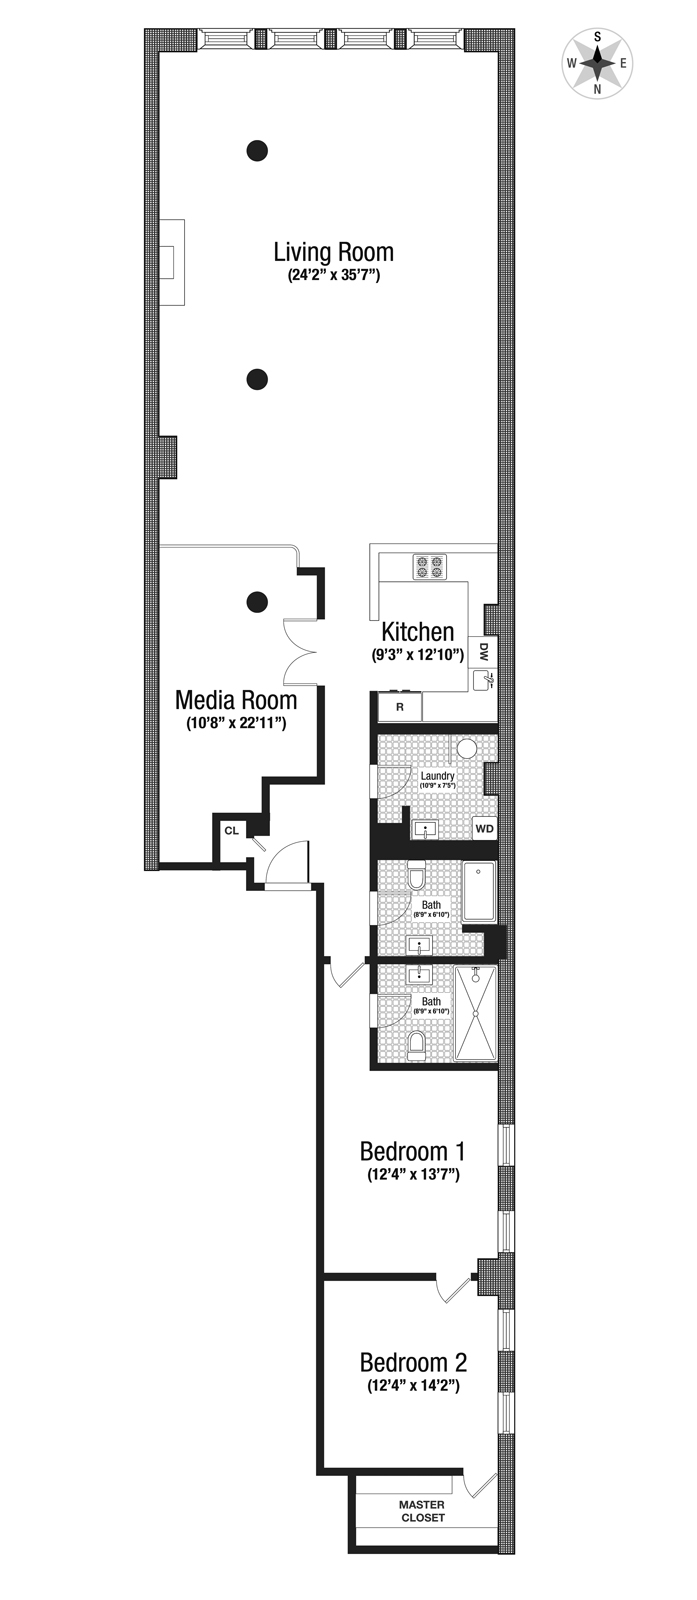 Floorplan for 39 North Moore Street, 3B